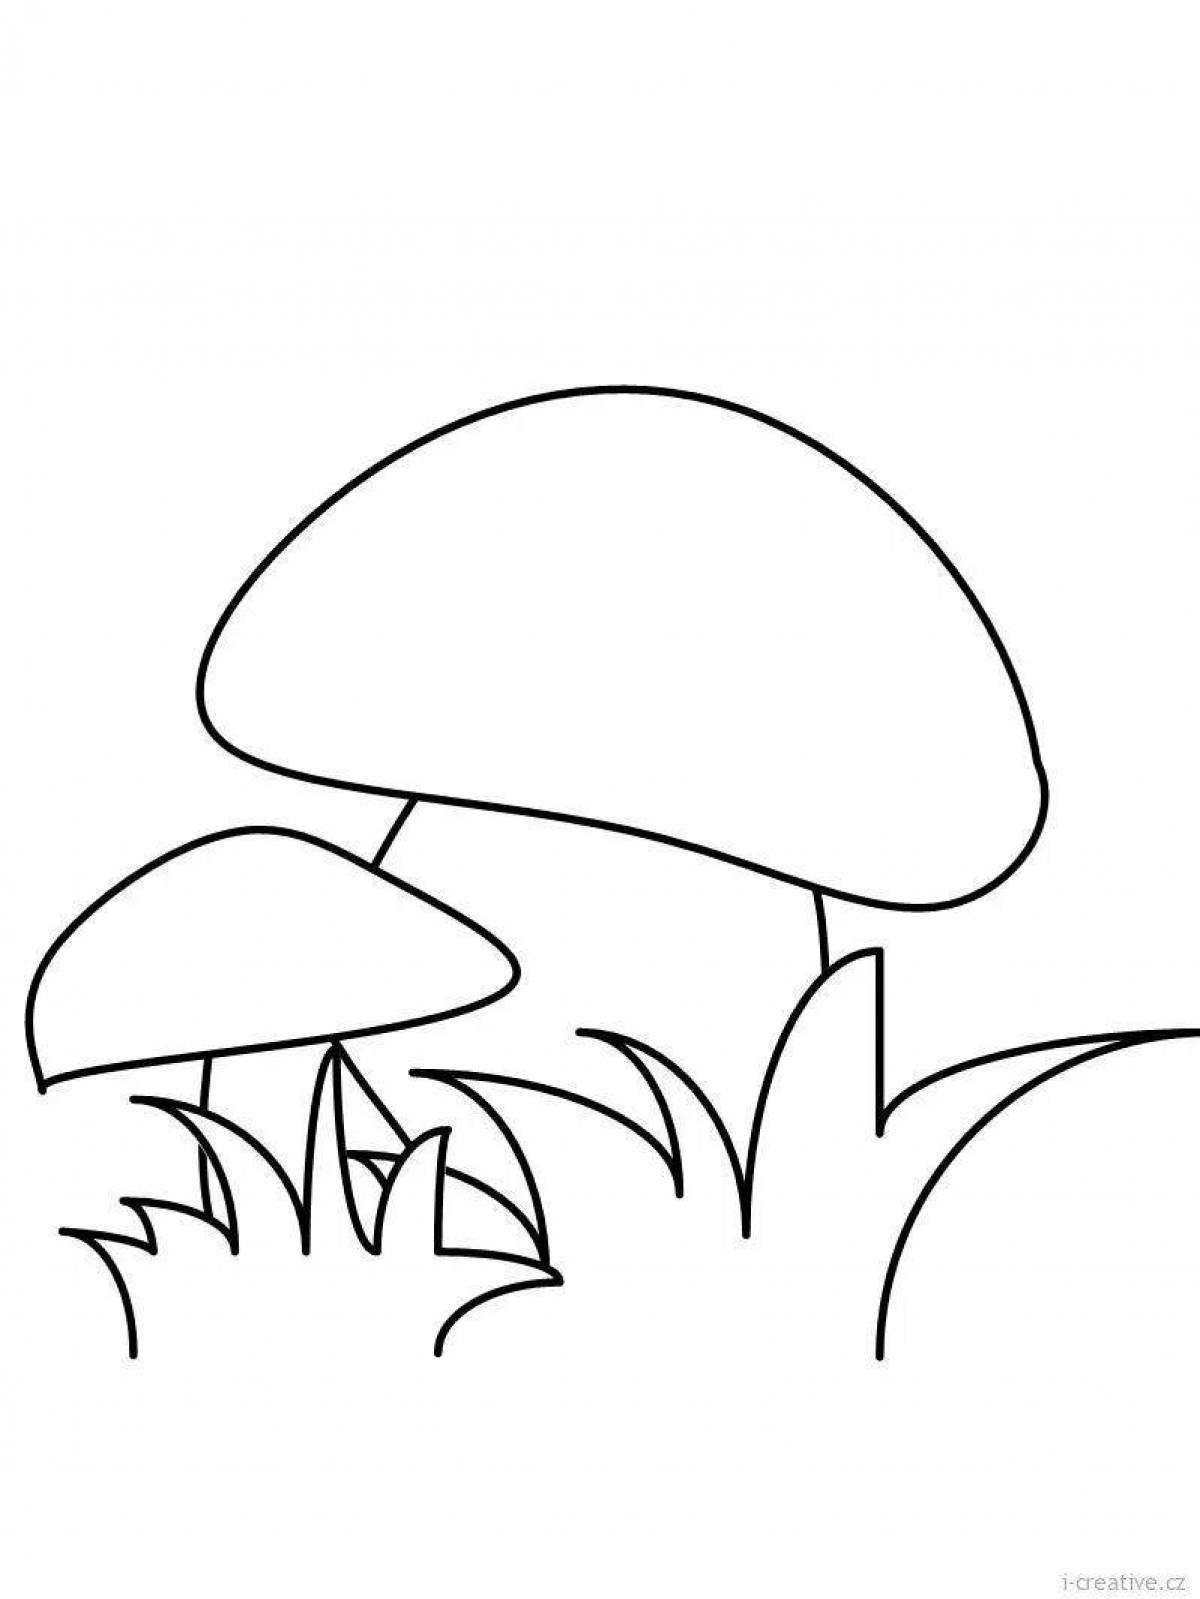 Charming coloring of boletus mushrooms